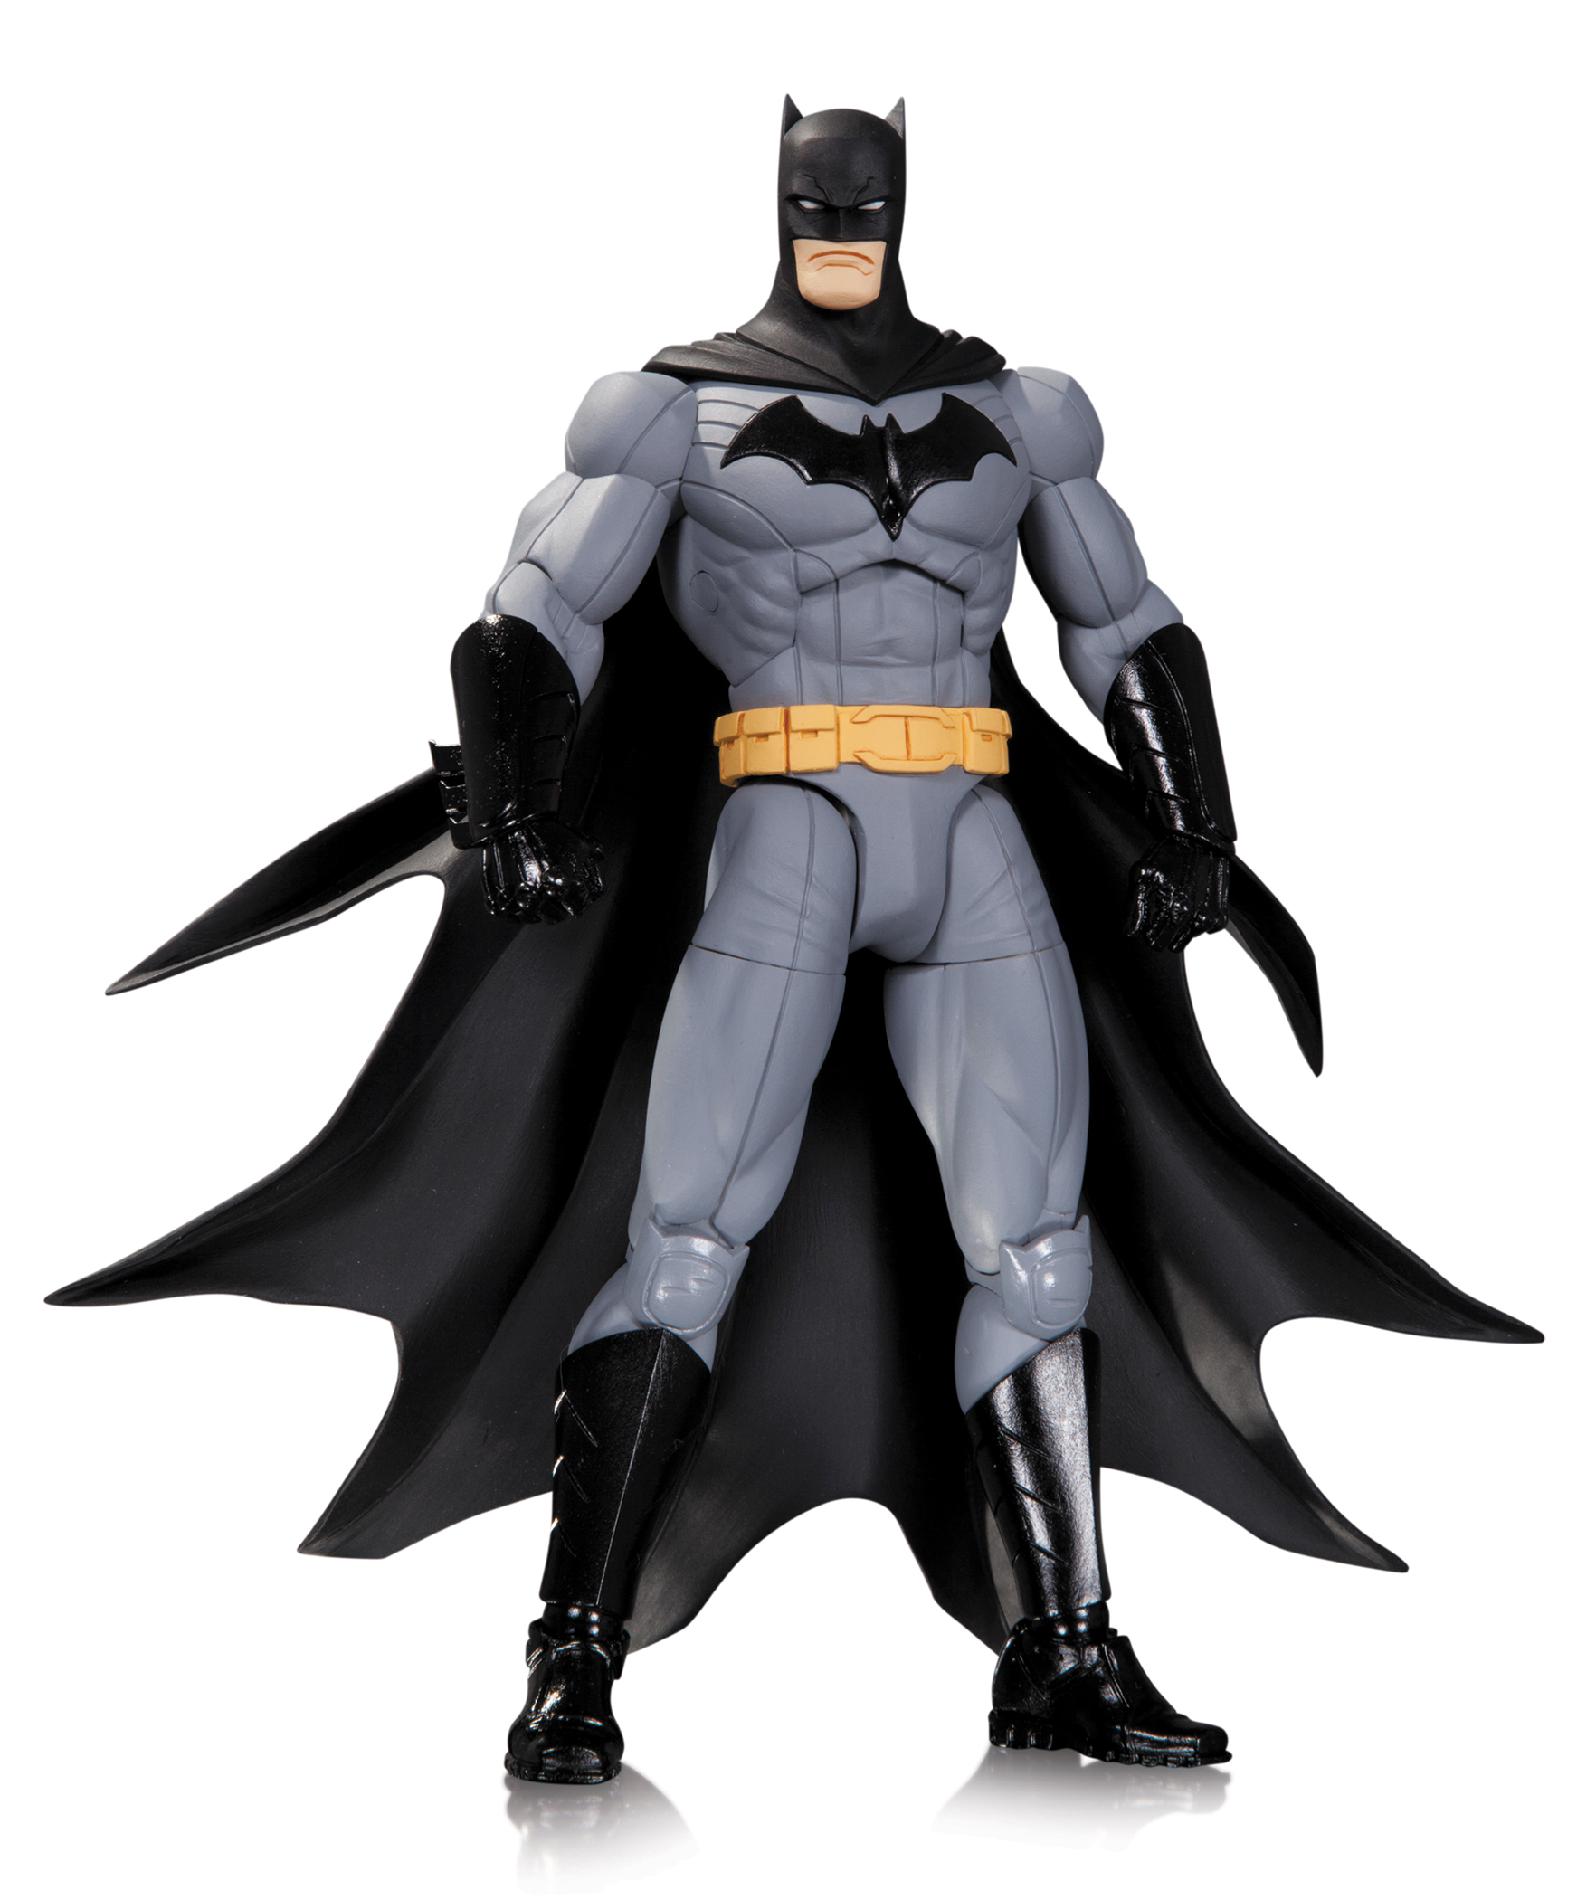 Designer Series 1 Greg Capullo Batman Action Figure